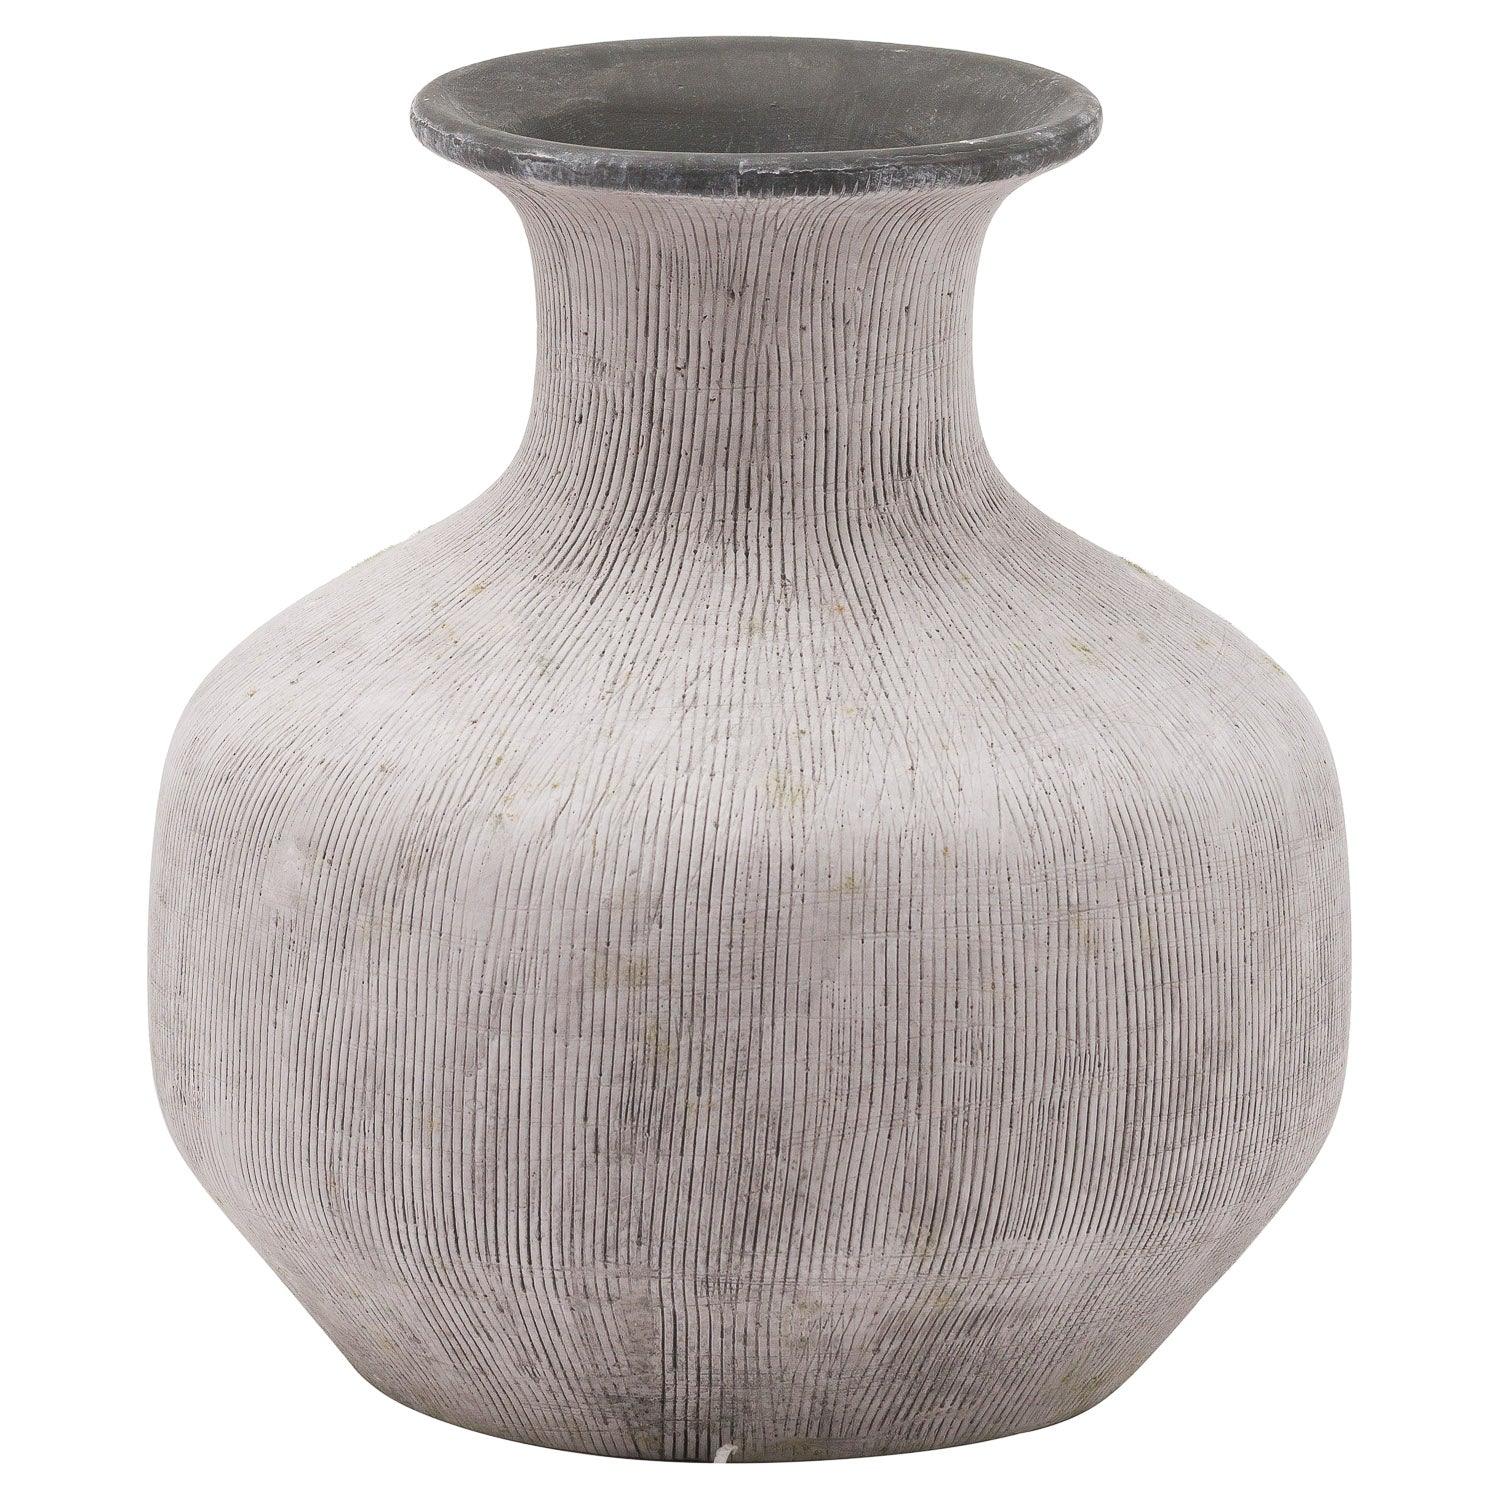 View Bloomville Squat Stone Vase information